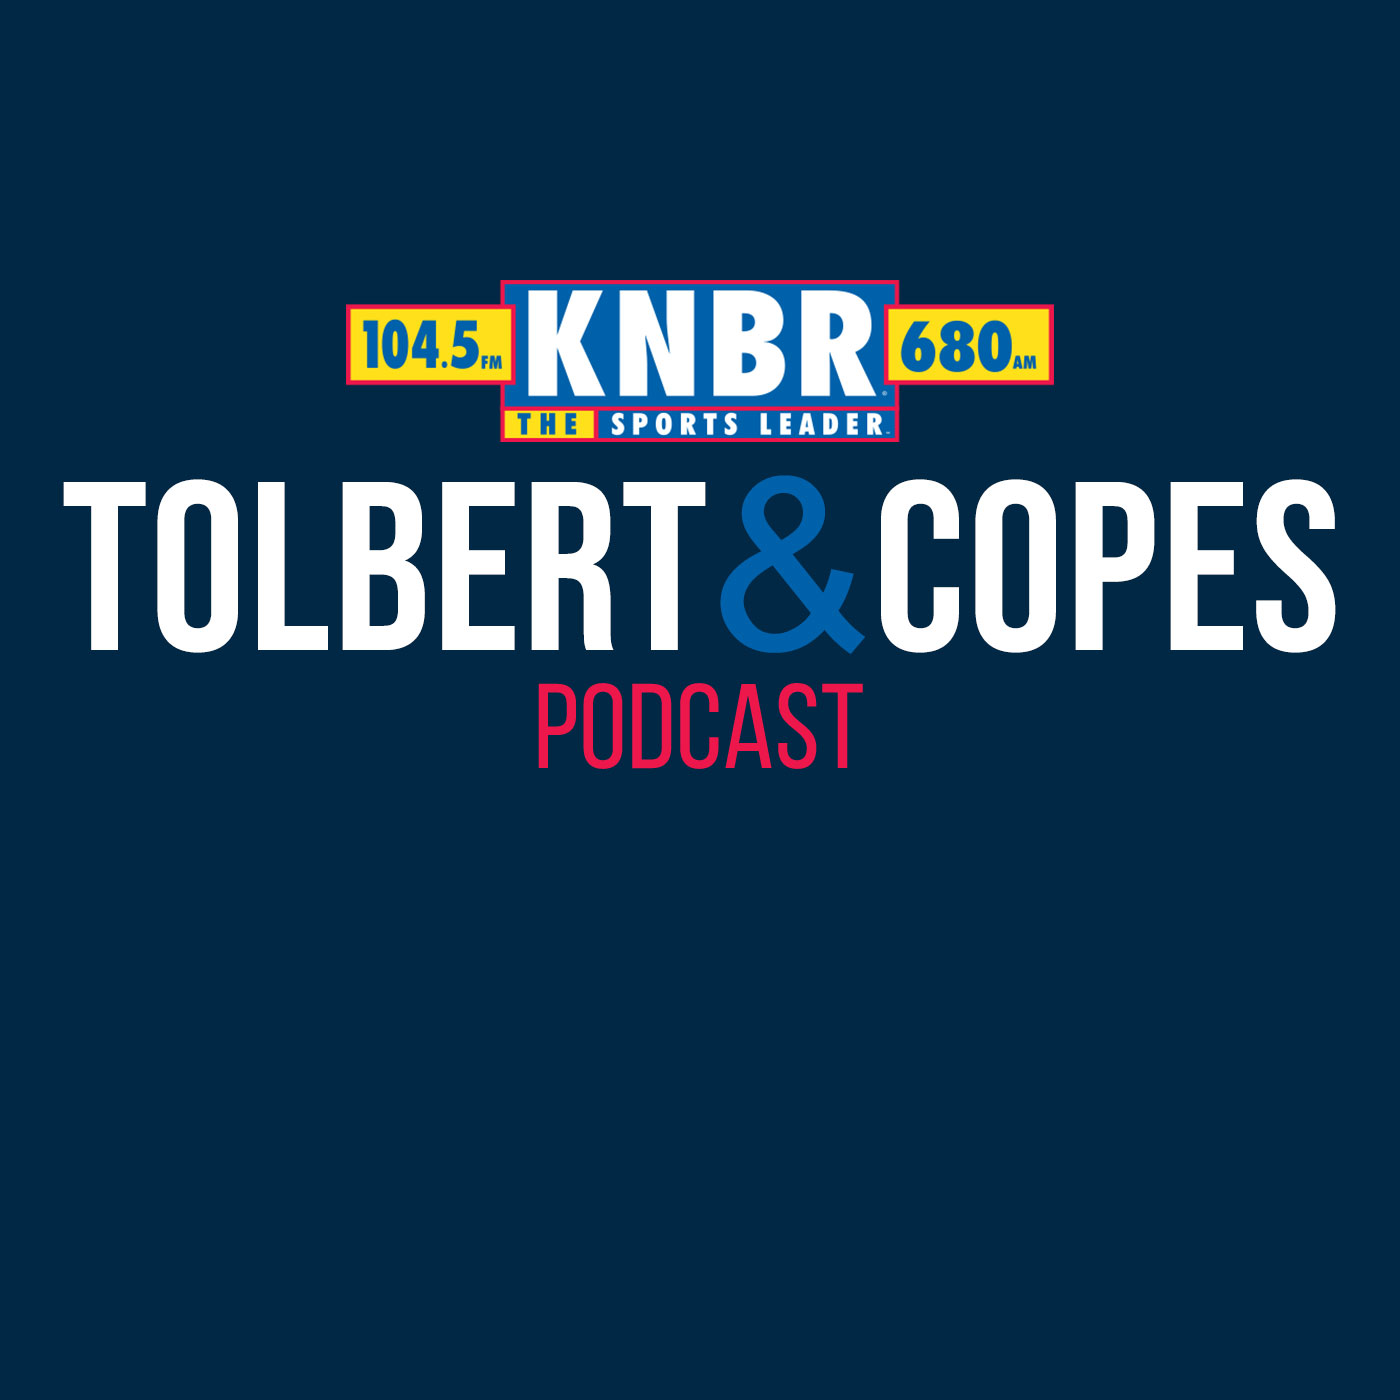 7-23 Tolbert & Copes Hour 2: Giants struggles continue in LA